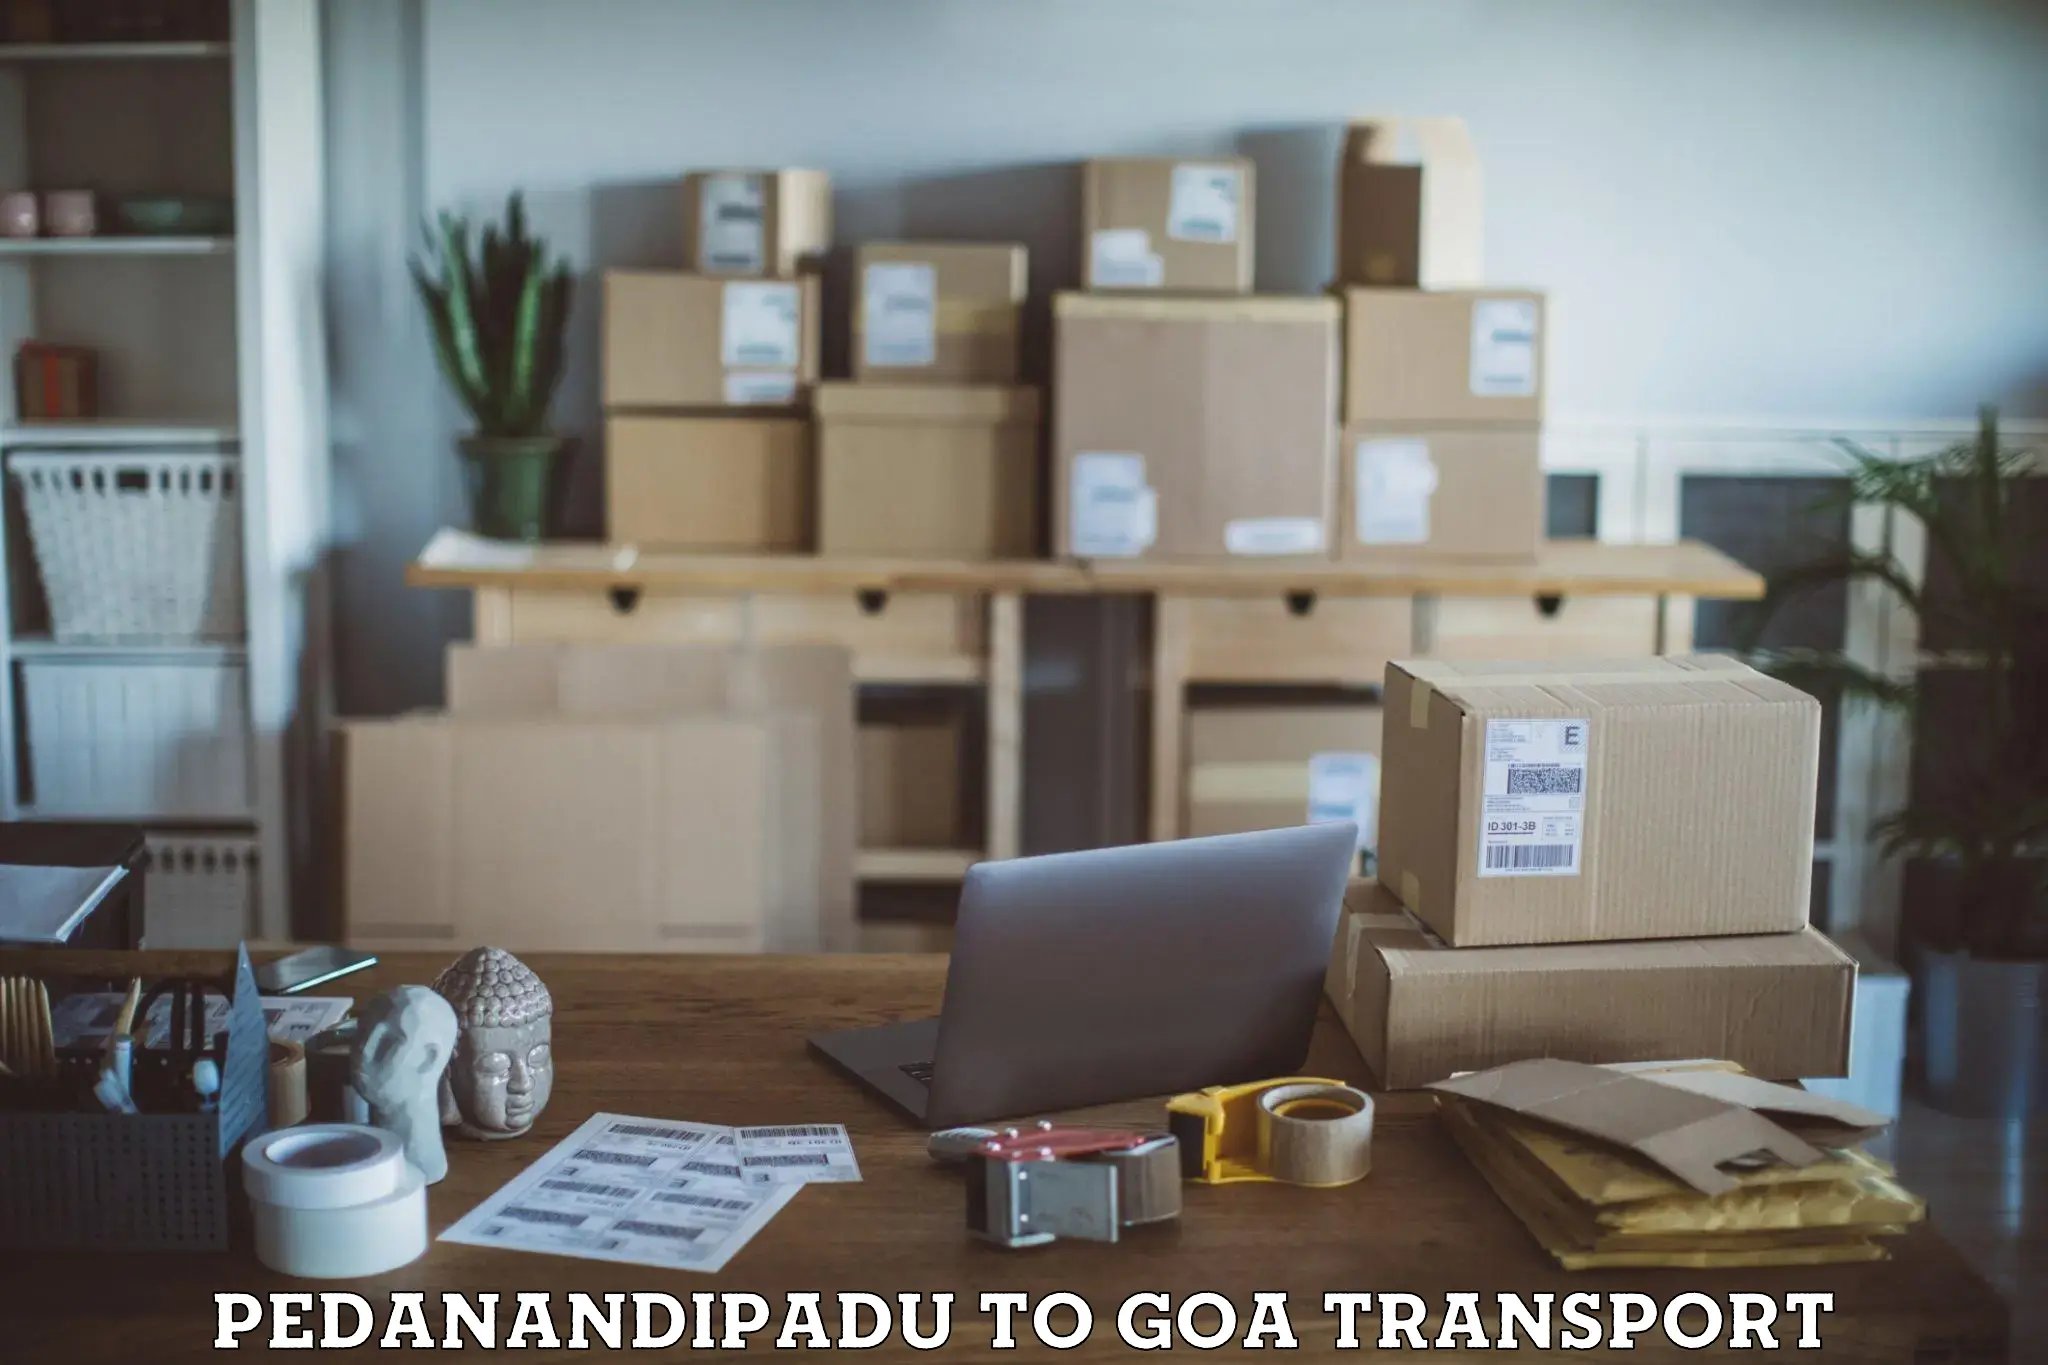 Transport bike from one state to another Pedanandipadu to Panjim